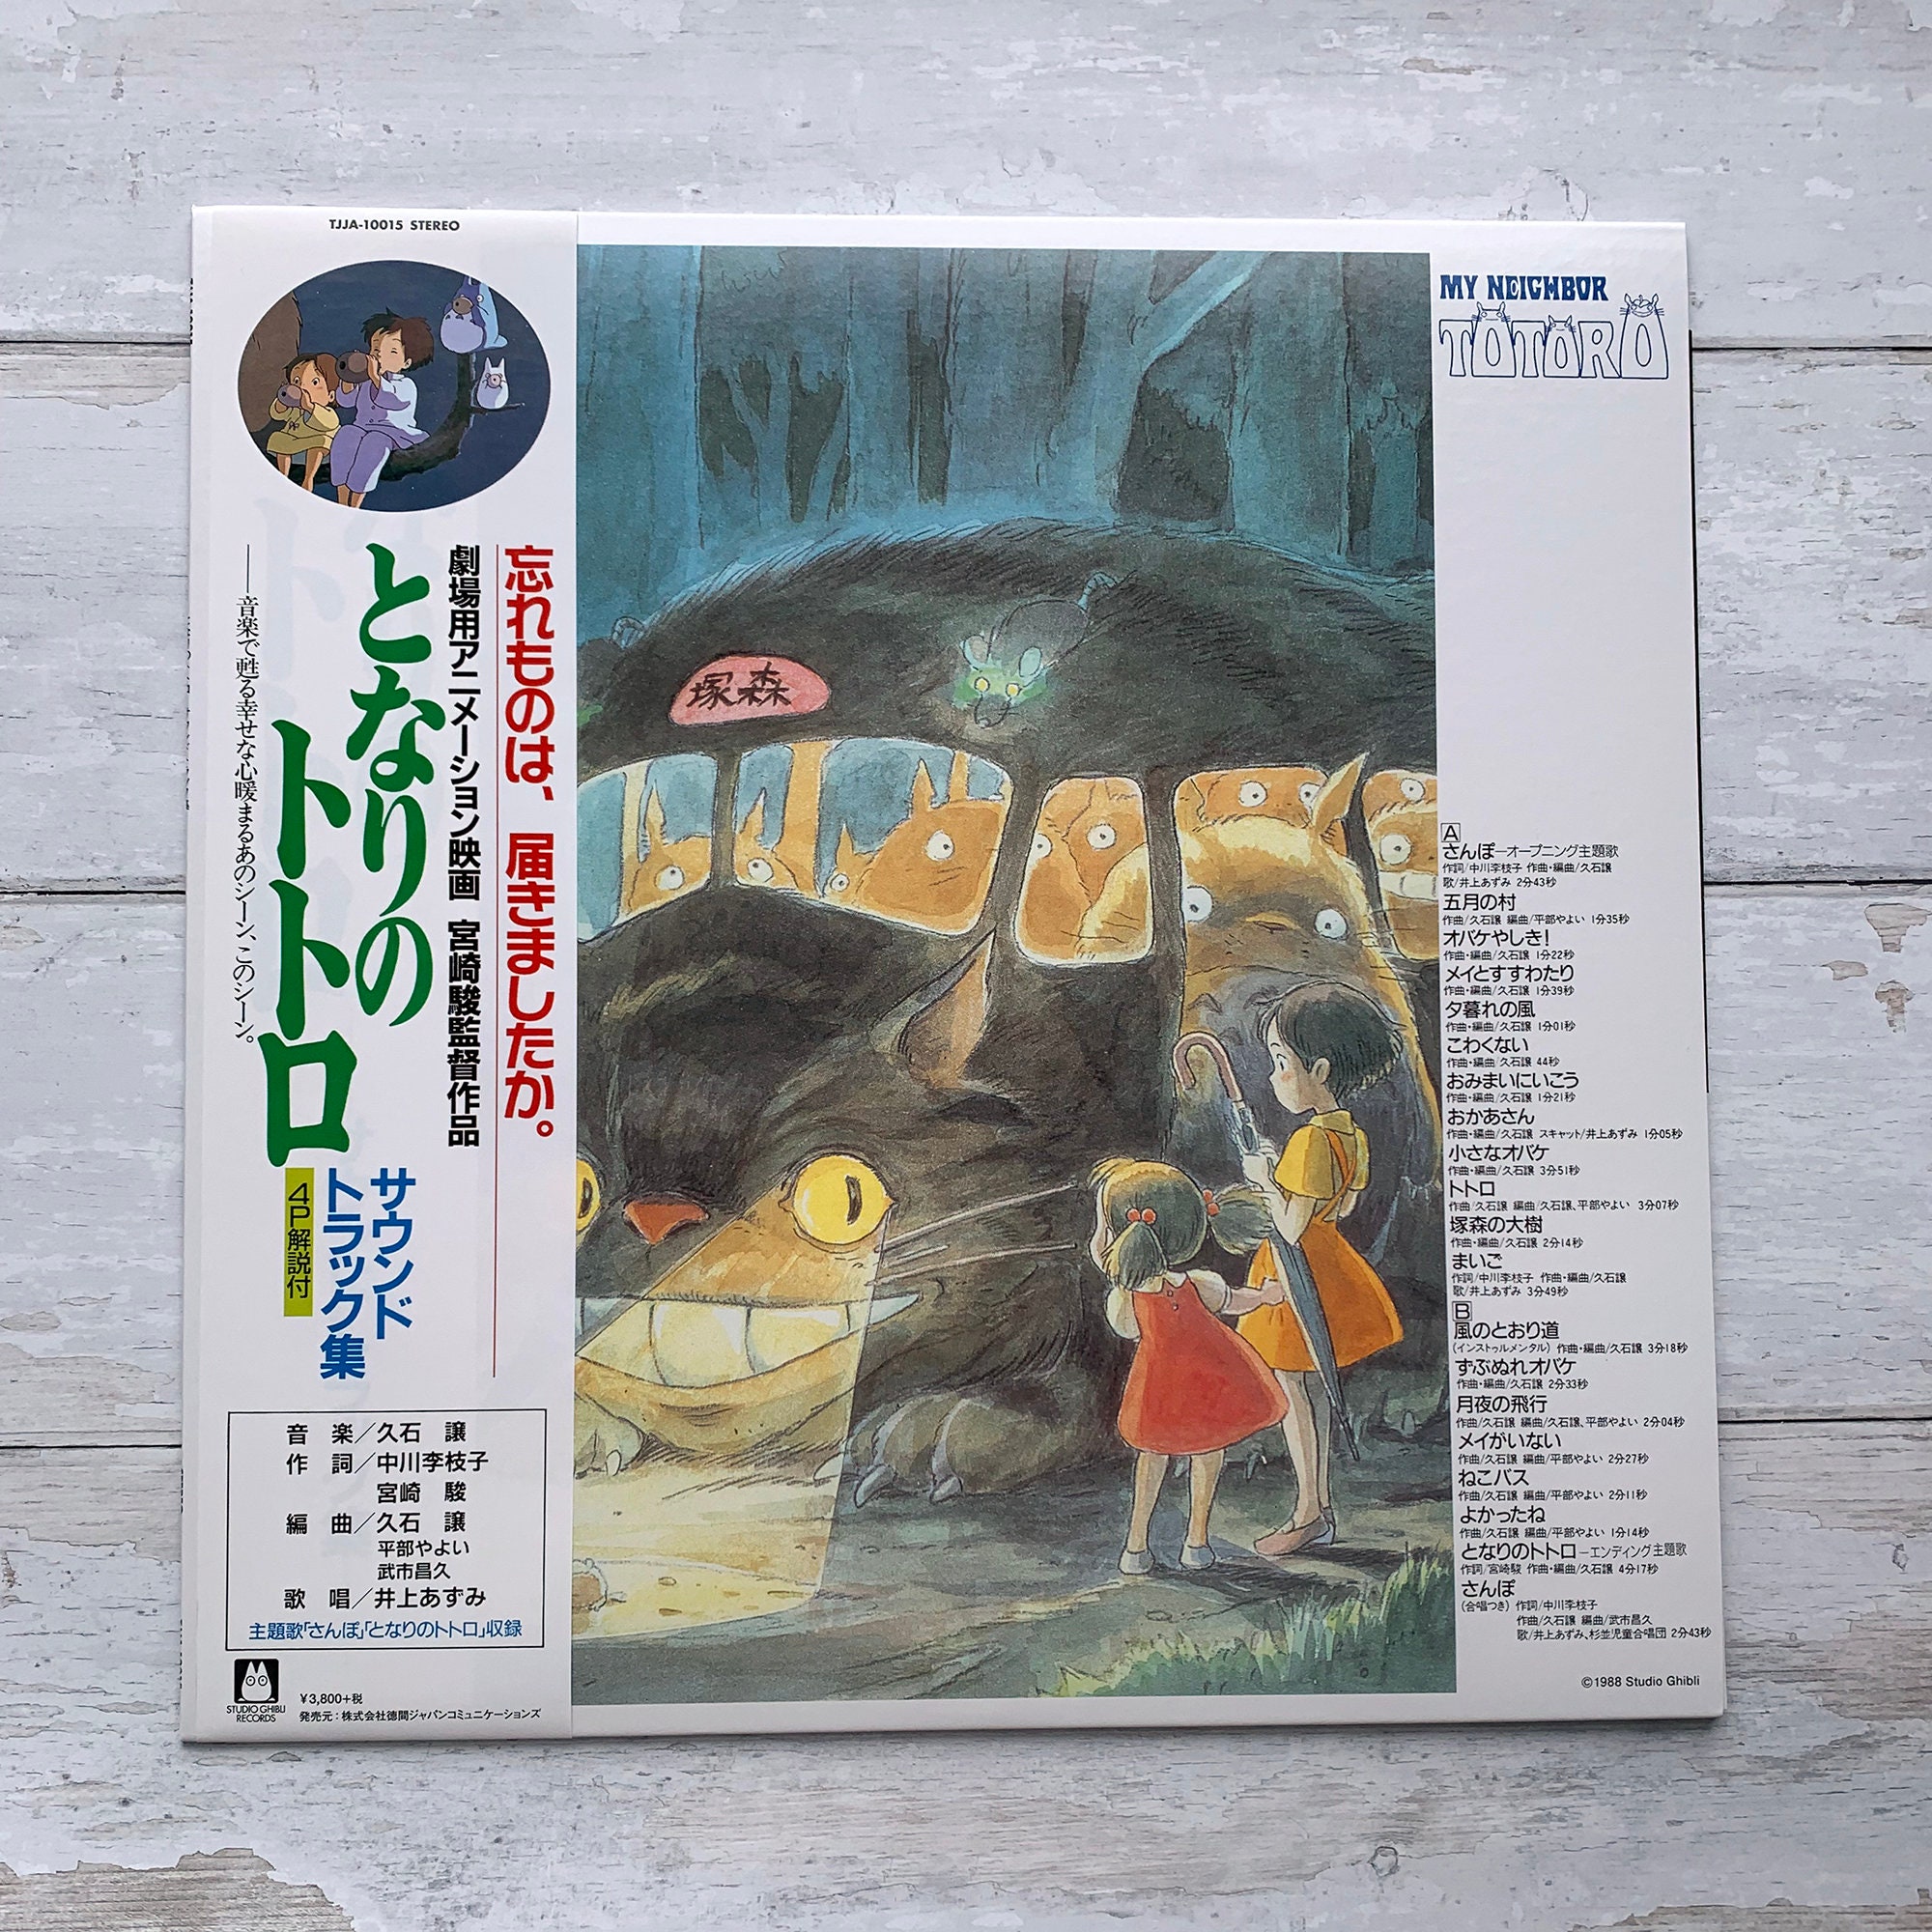 My Neighbor Totoro (Original Soundtrack): CDs & Vinyl 